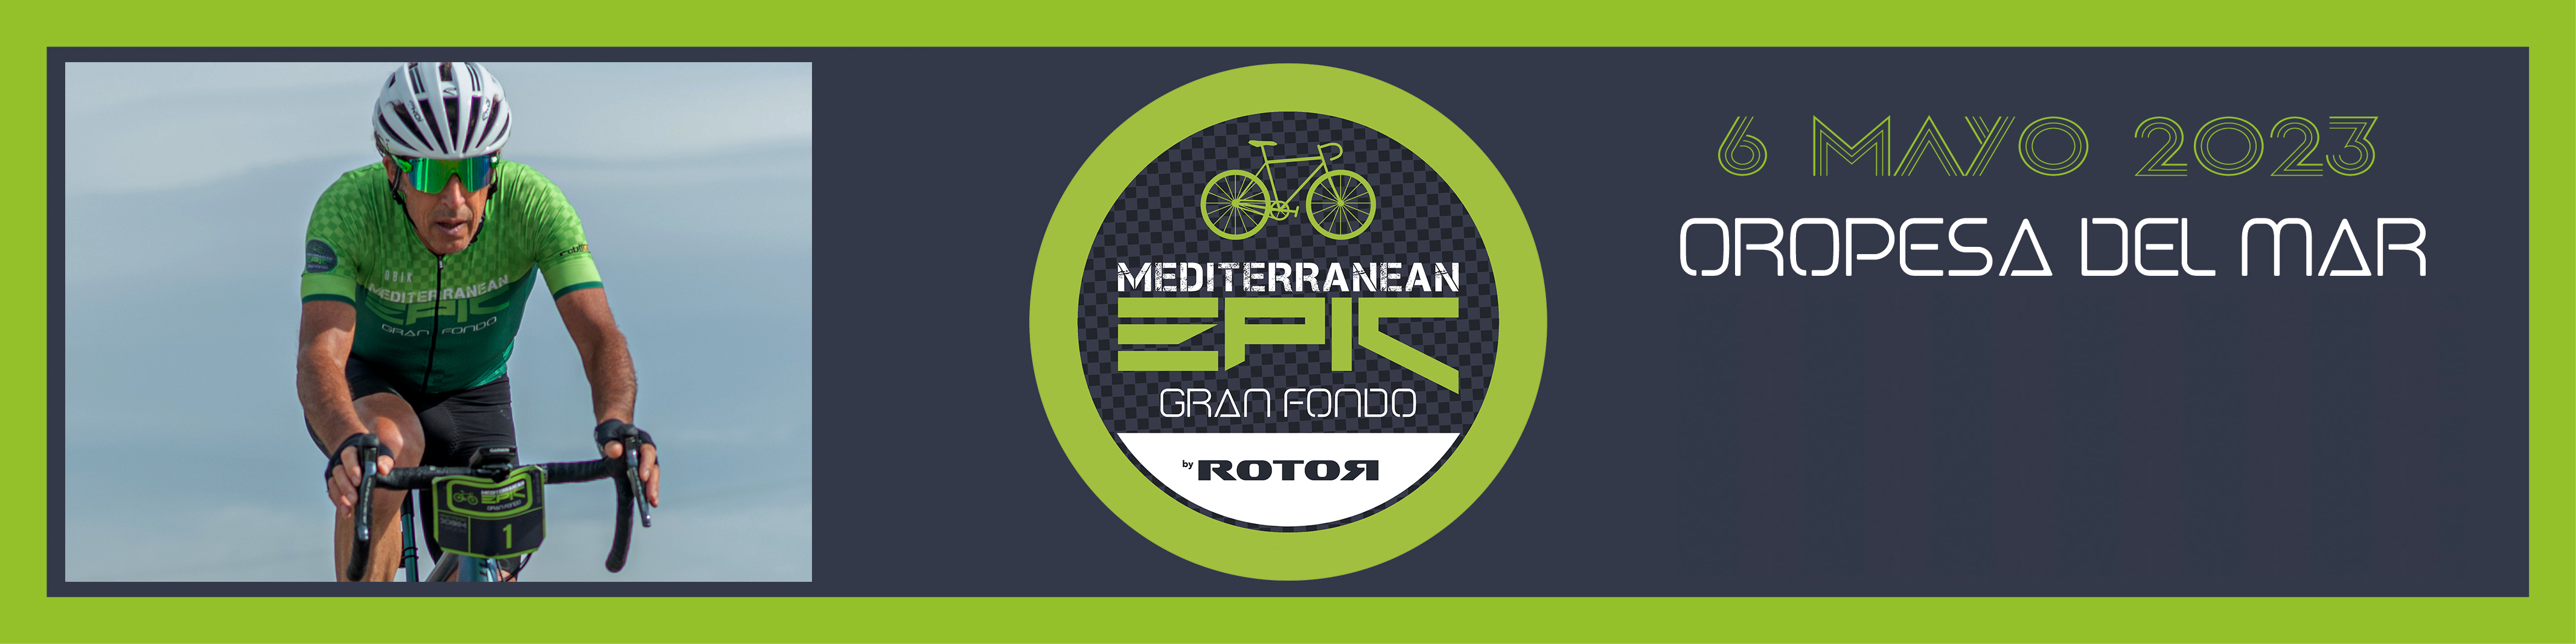 Mediterranean Epic Gran Fondo by ROTOR